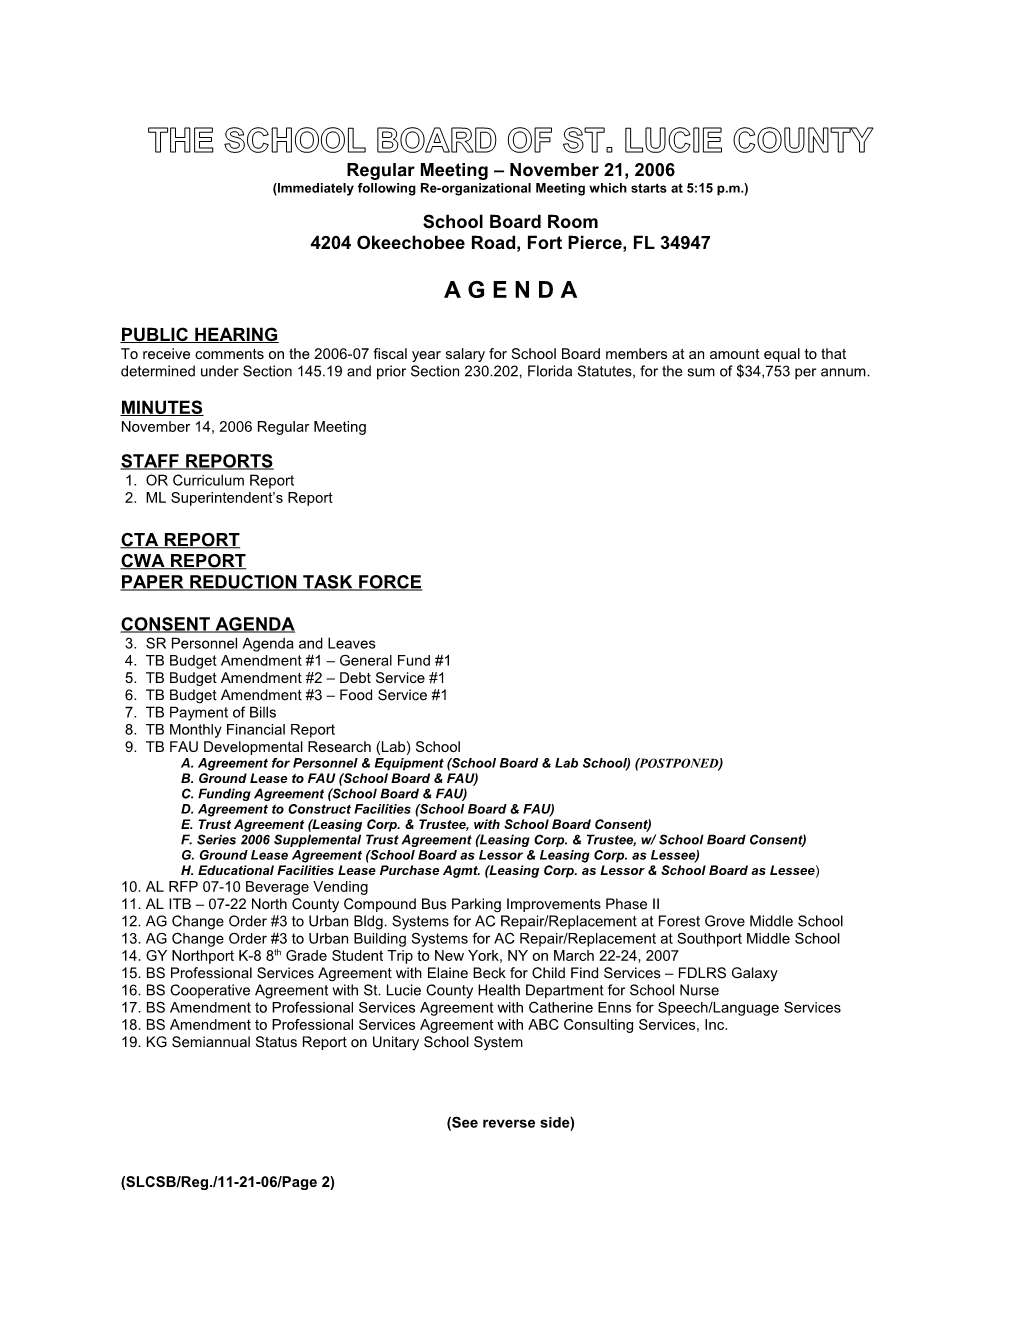 11-21-06 SLCSB Regular Meeting Agenda - Final